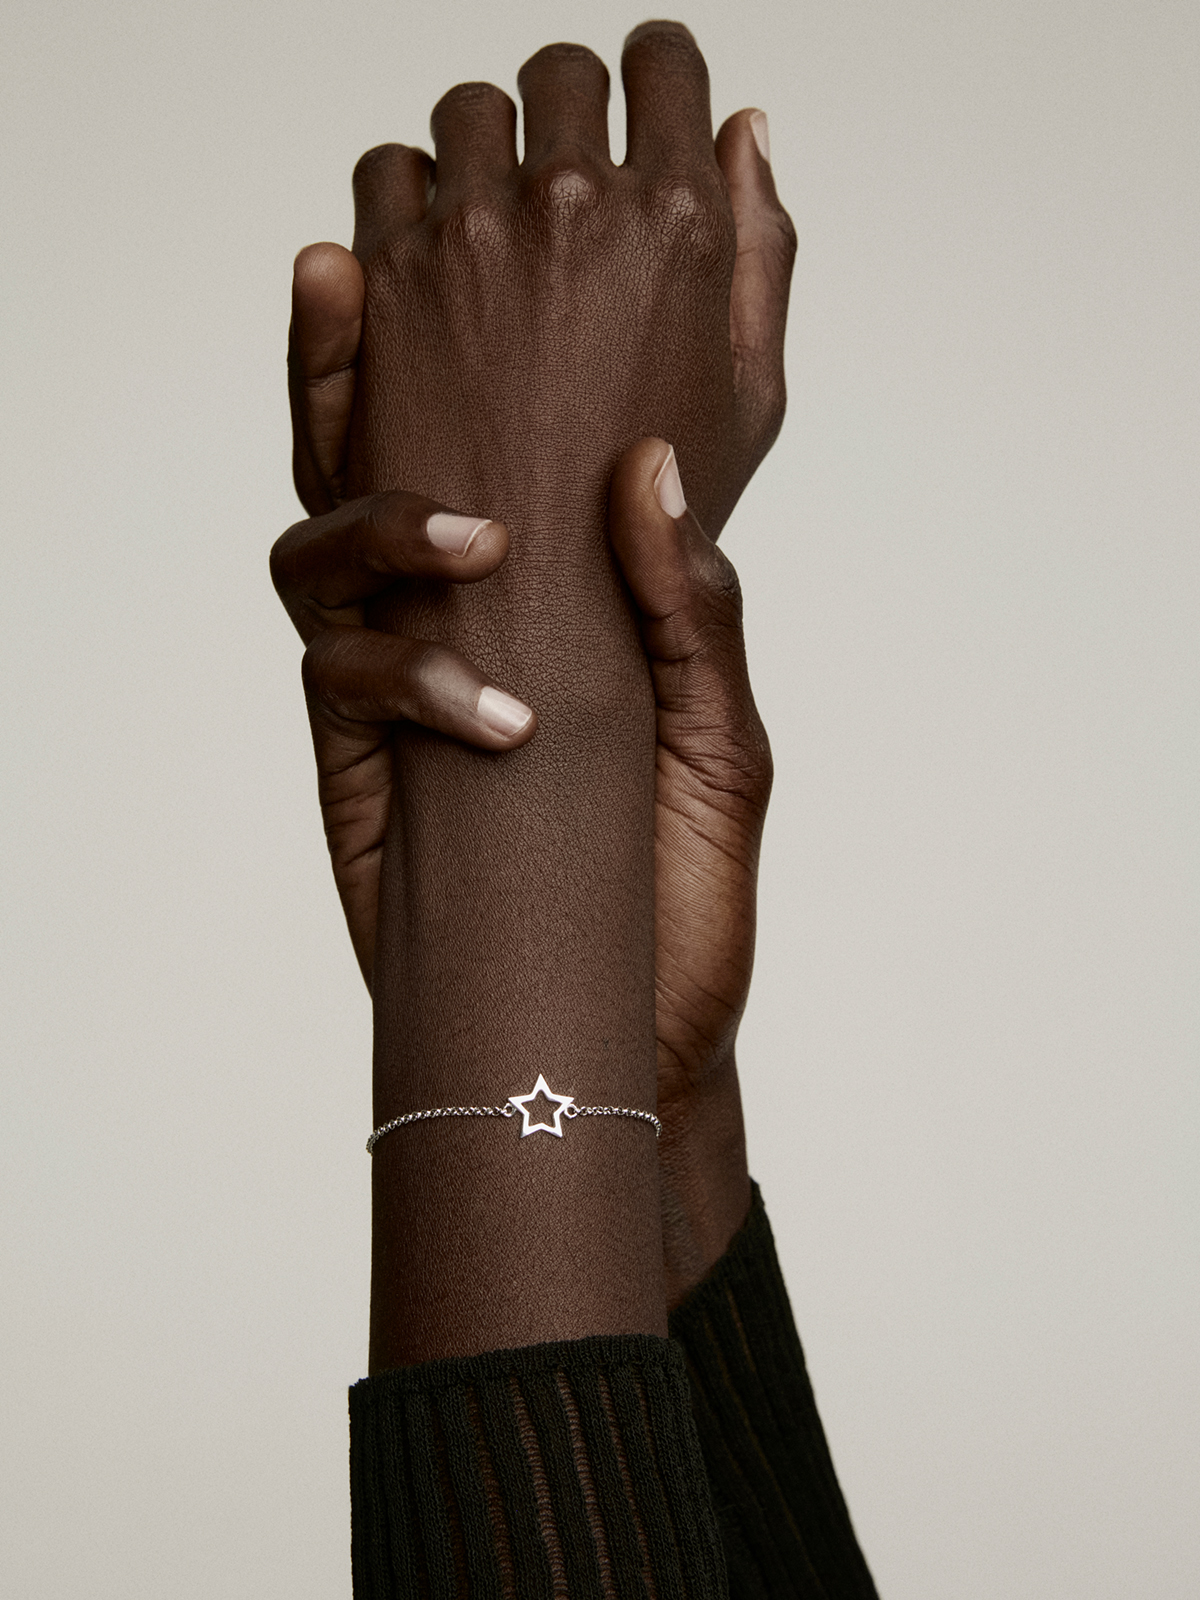 925 Silver bracelet with a star shape